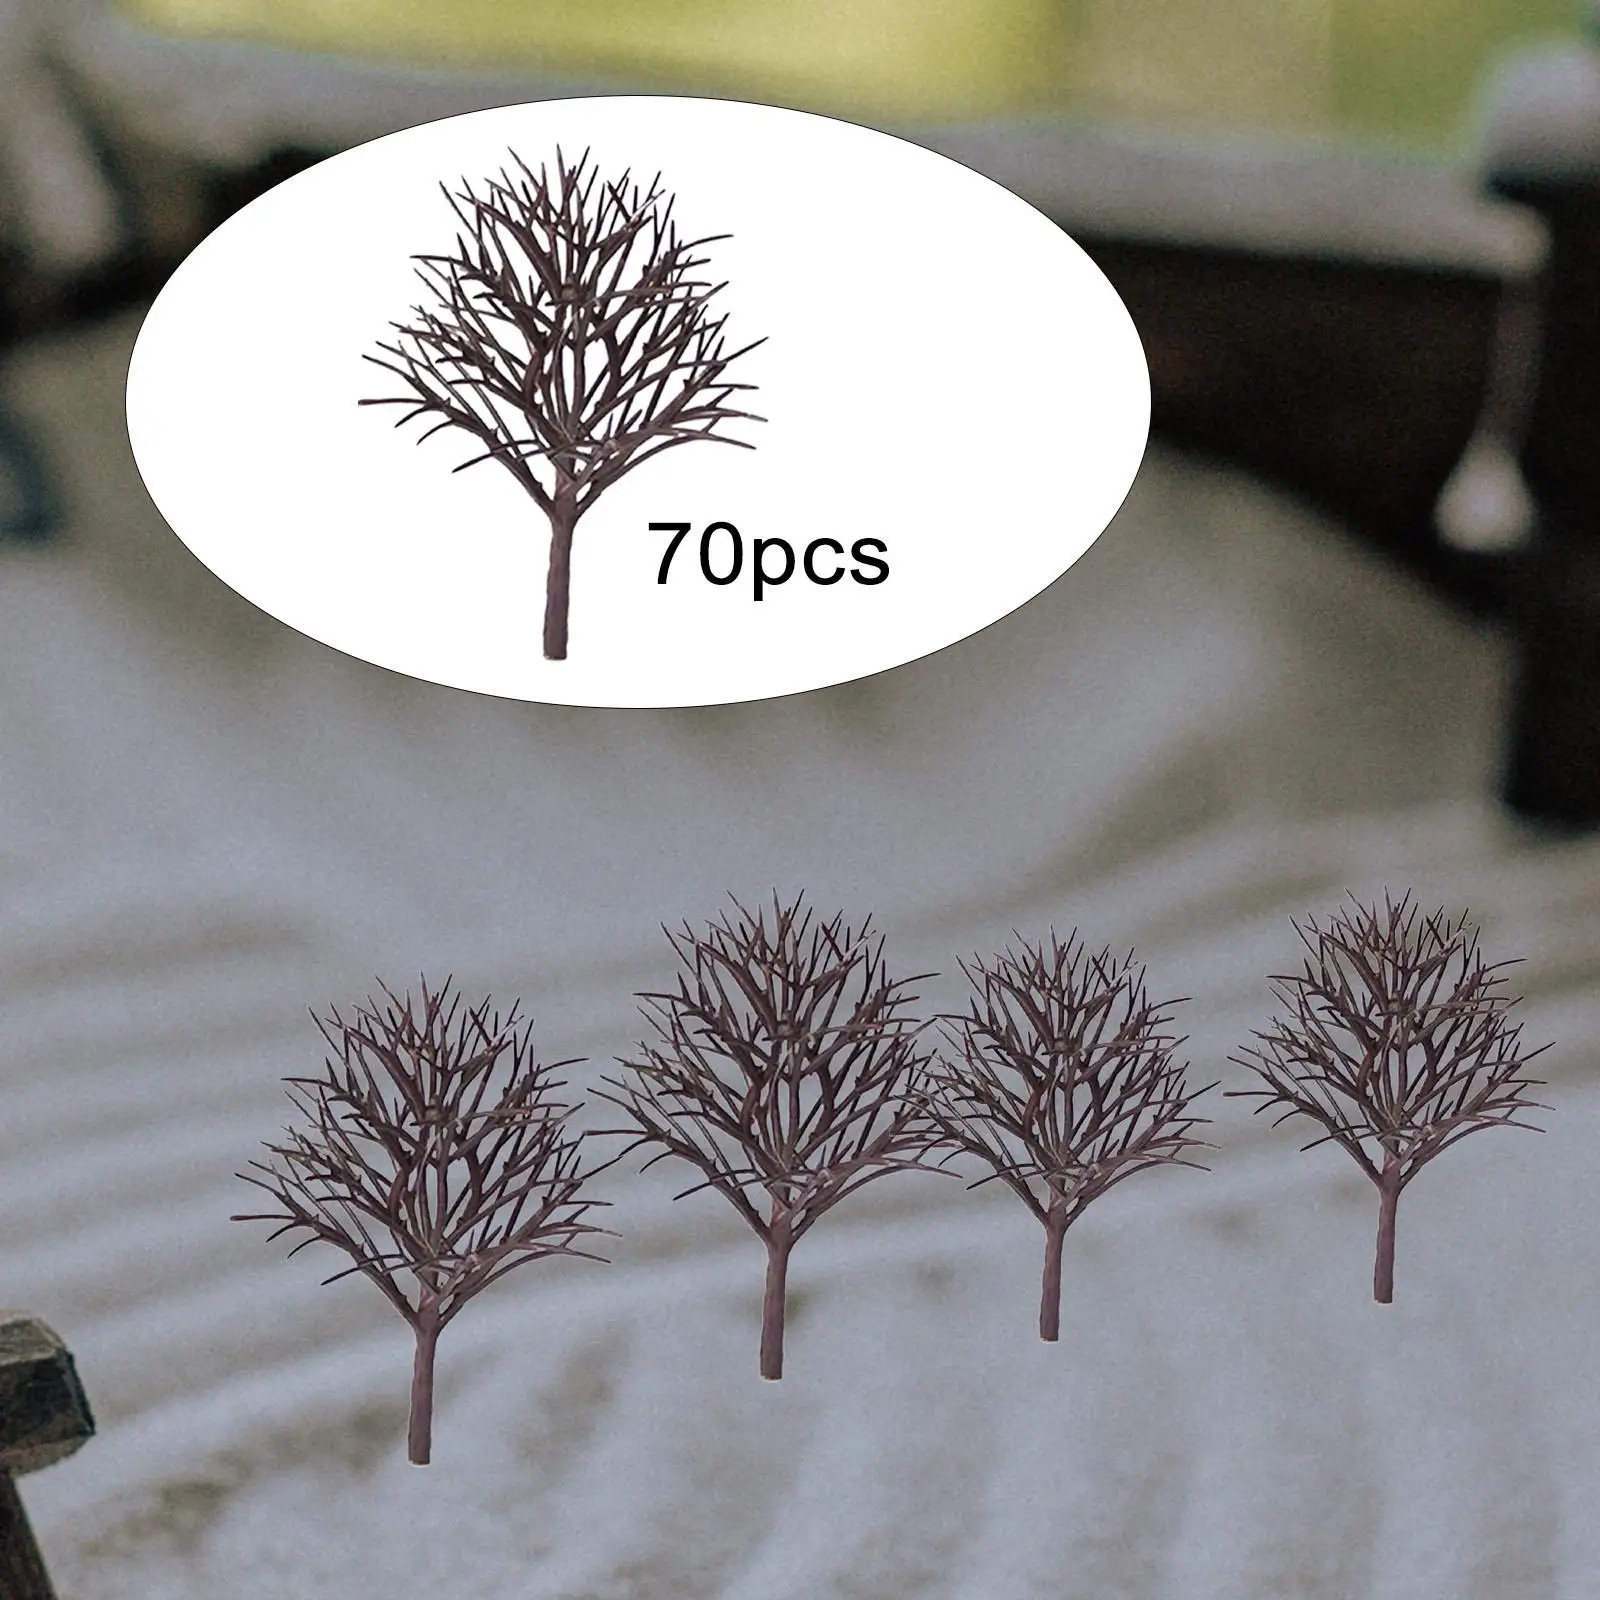 70Pcs Model Trees 2.36inch Miniature Trees Model Tree Landscape Diorama for Sand table Building Model Scenery Landscape